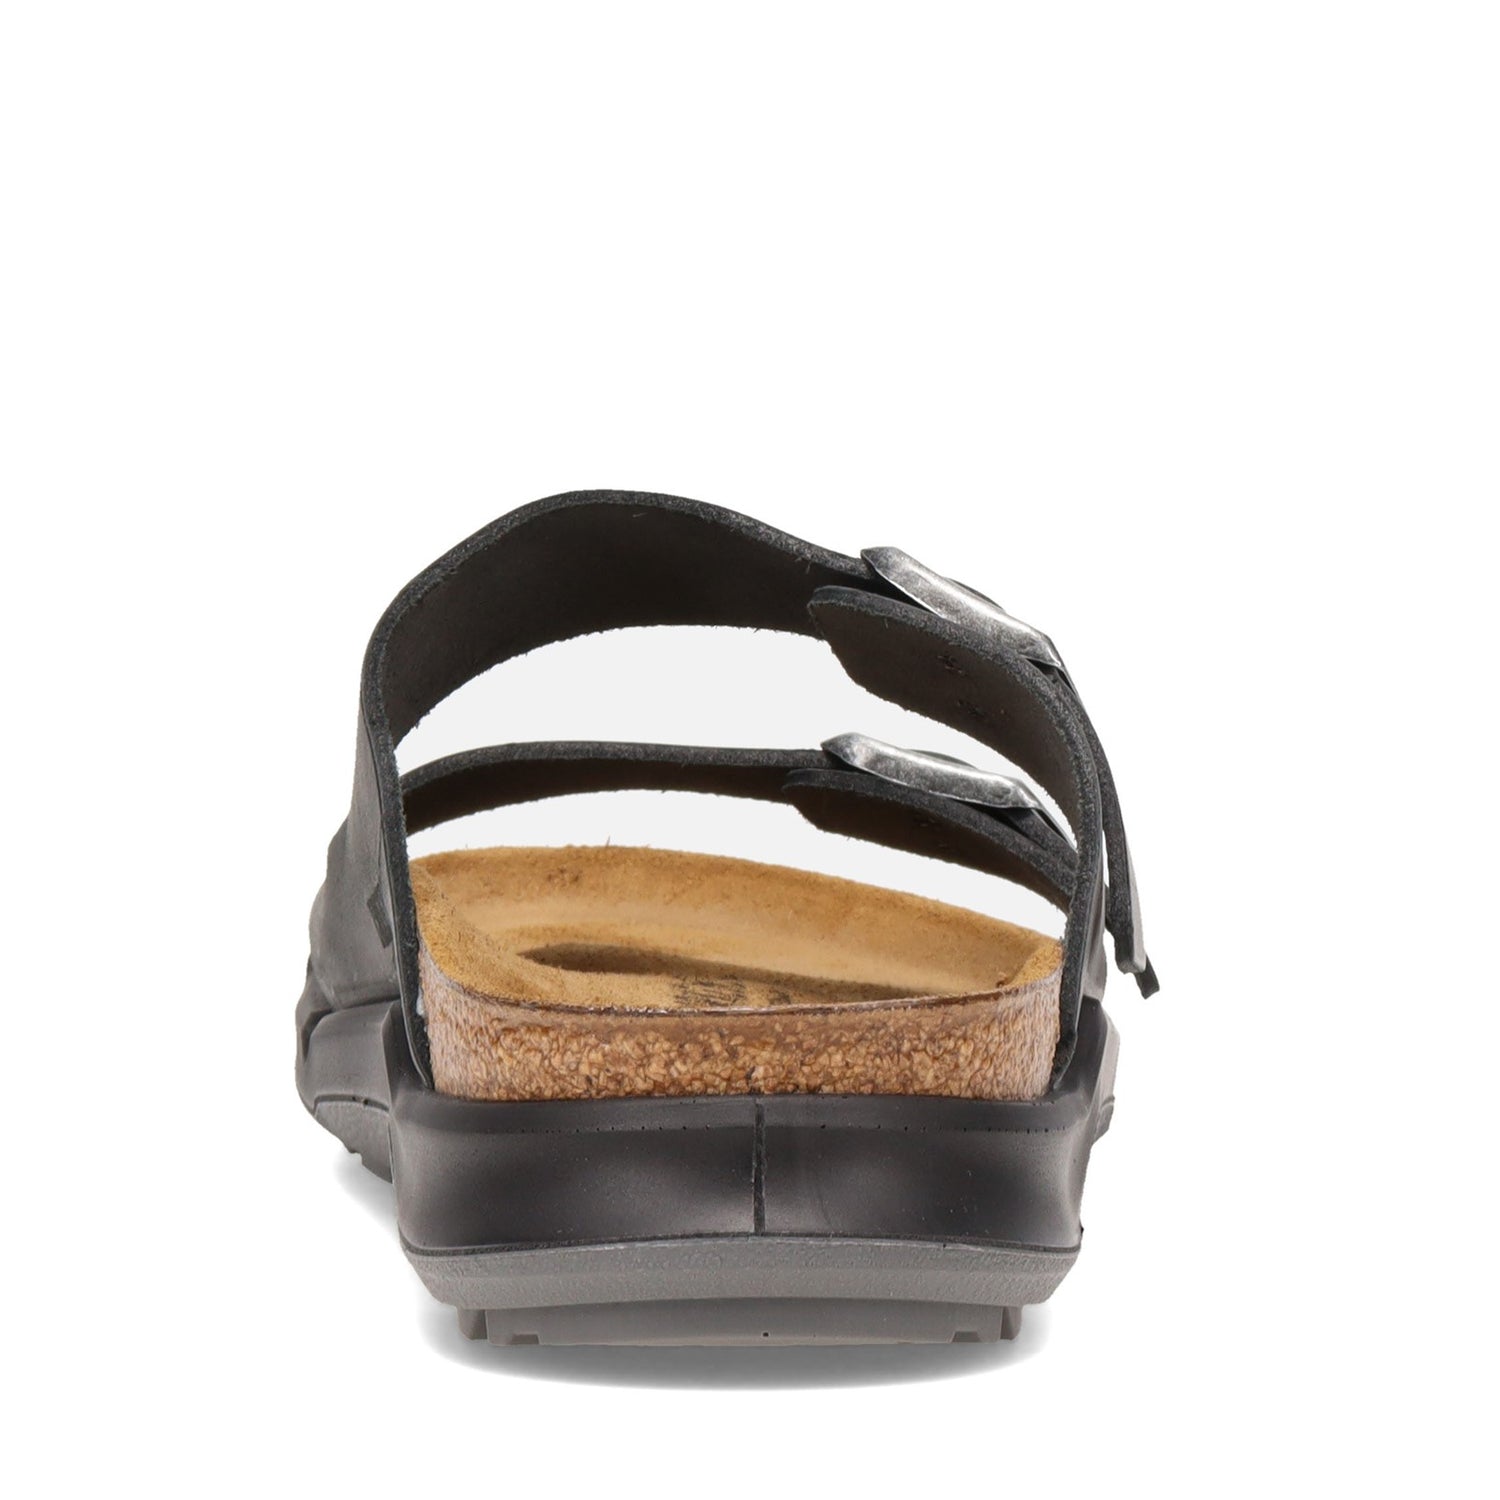 Peltz Shoes  Men's Birkenstock Arizona Rugged Sandal - Regular Width BLACK R 1018 461